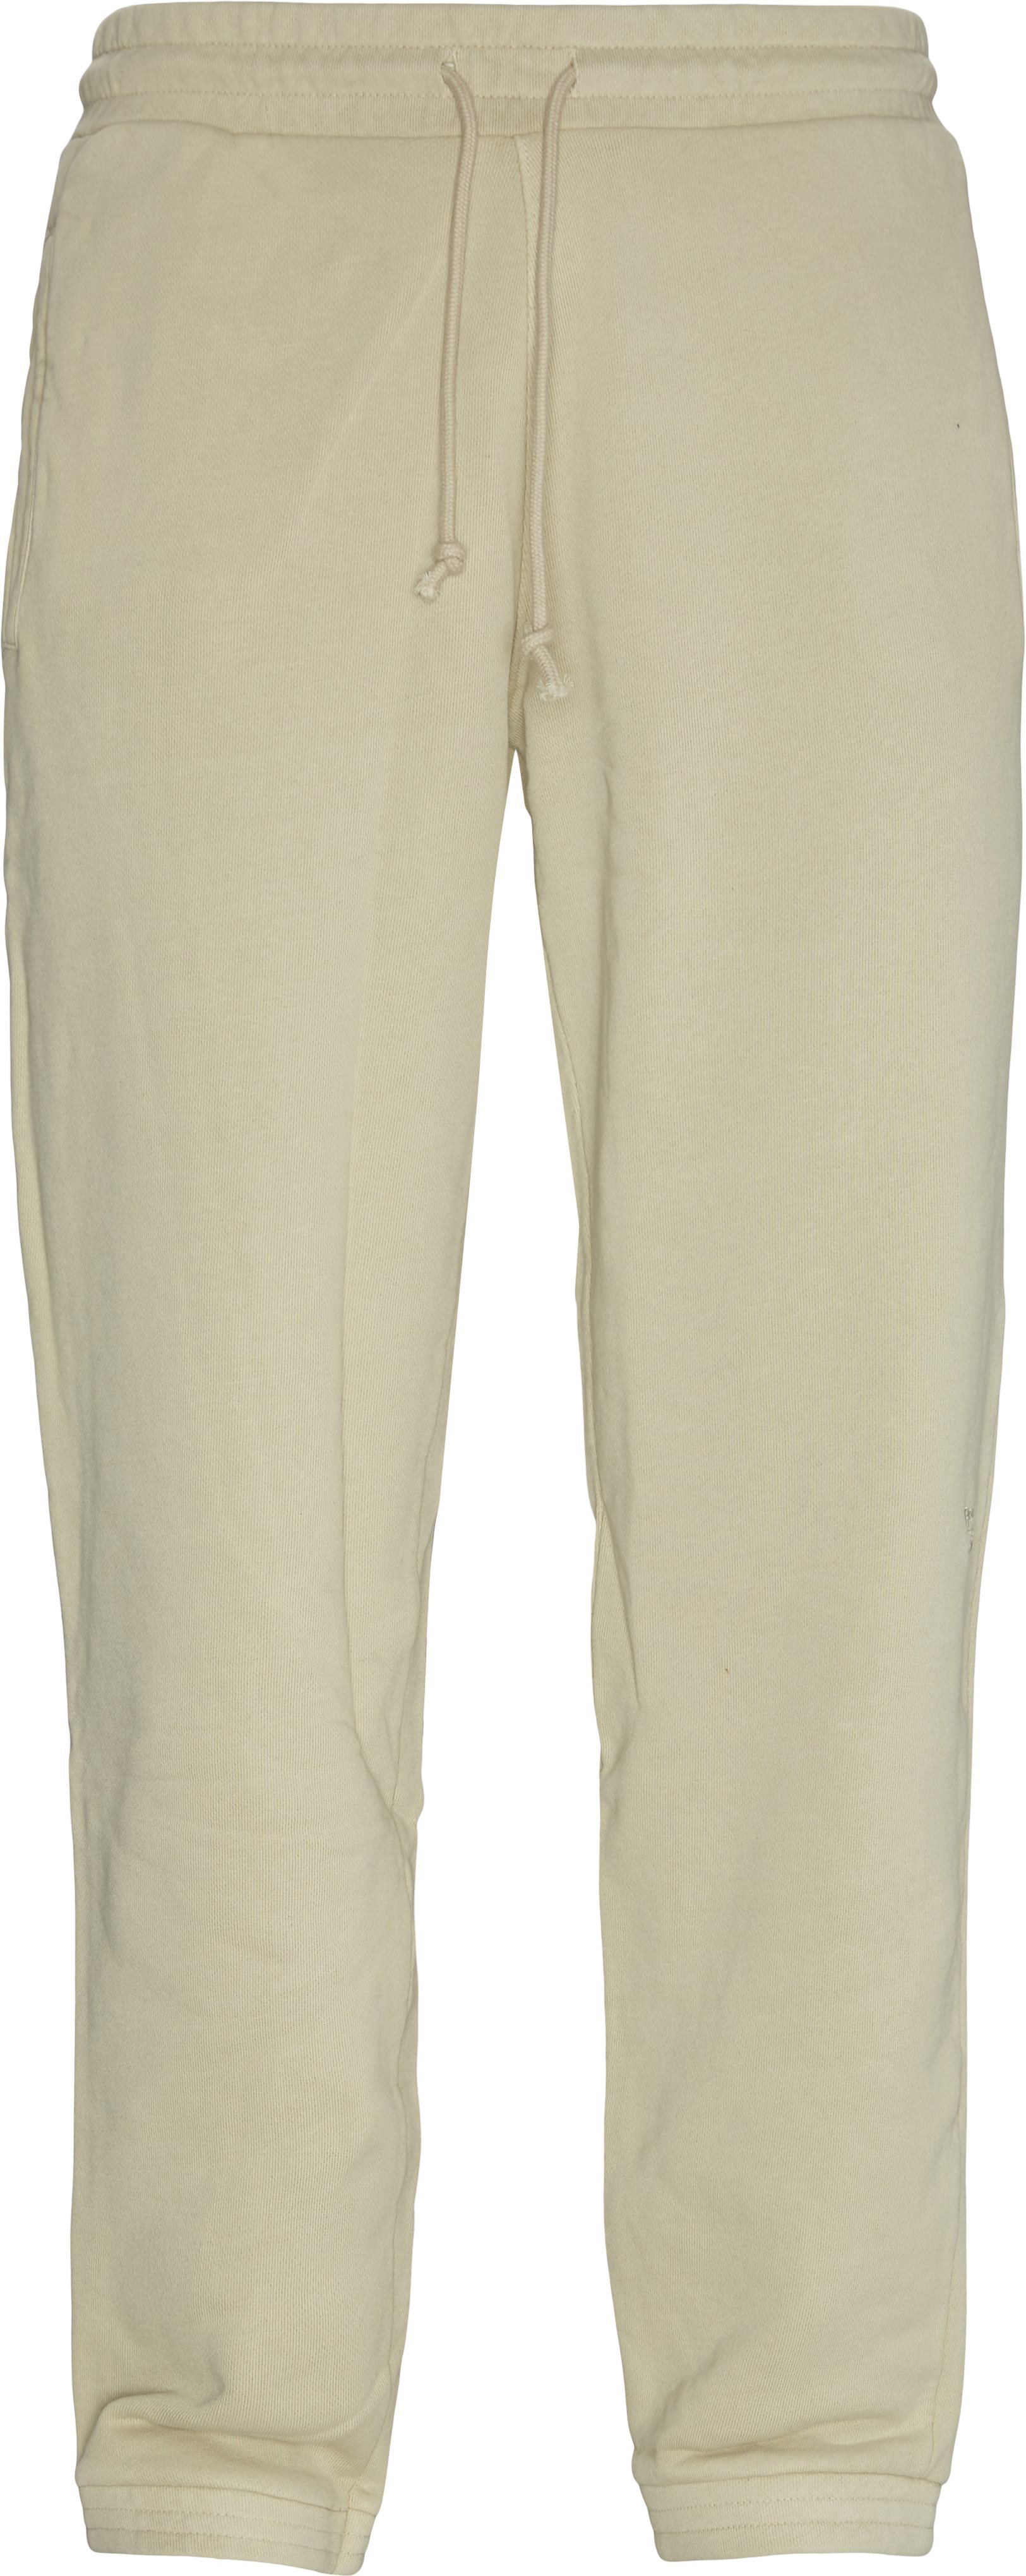 Sweatpants - Trousers - Regular fit - Sand